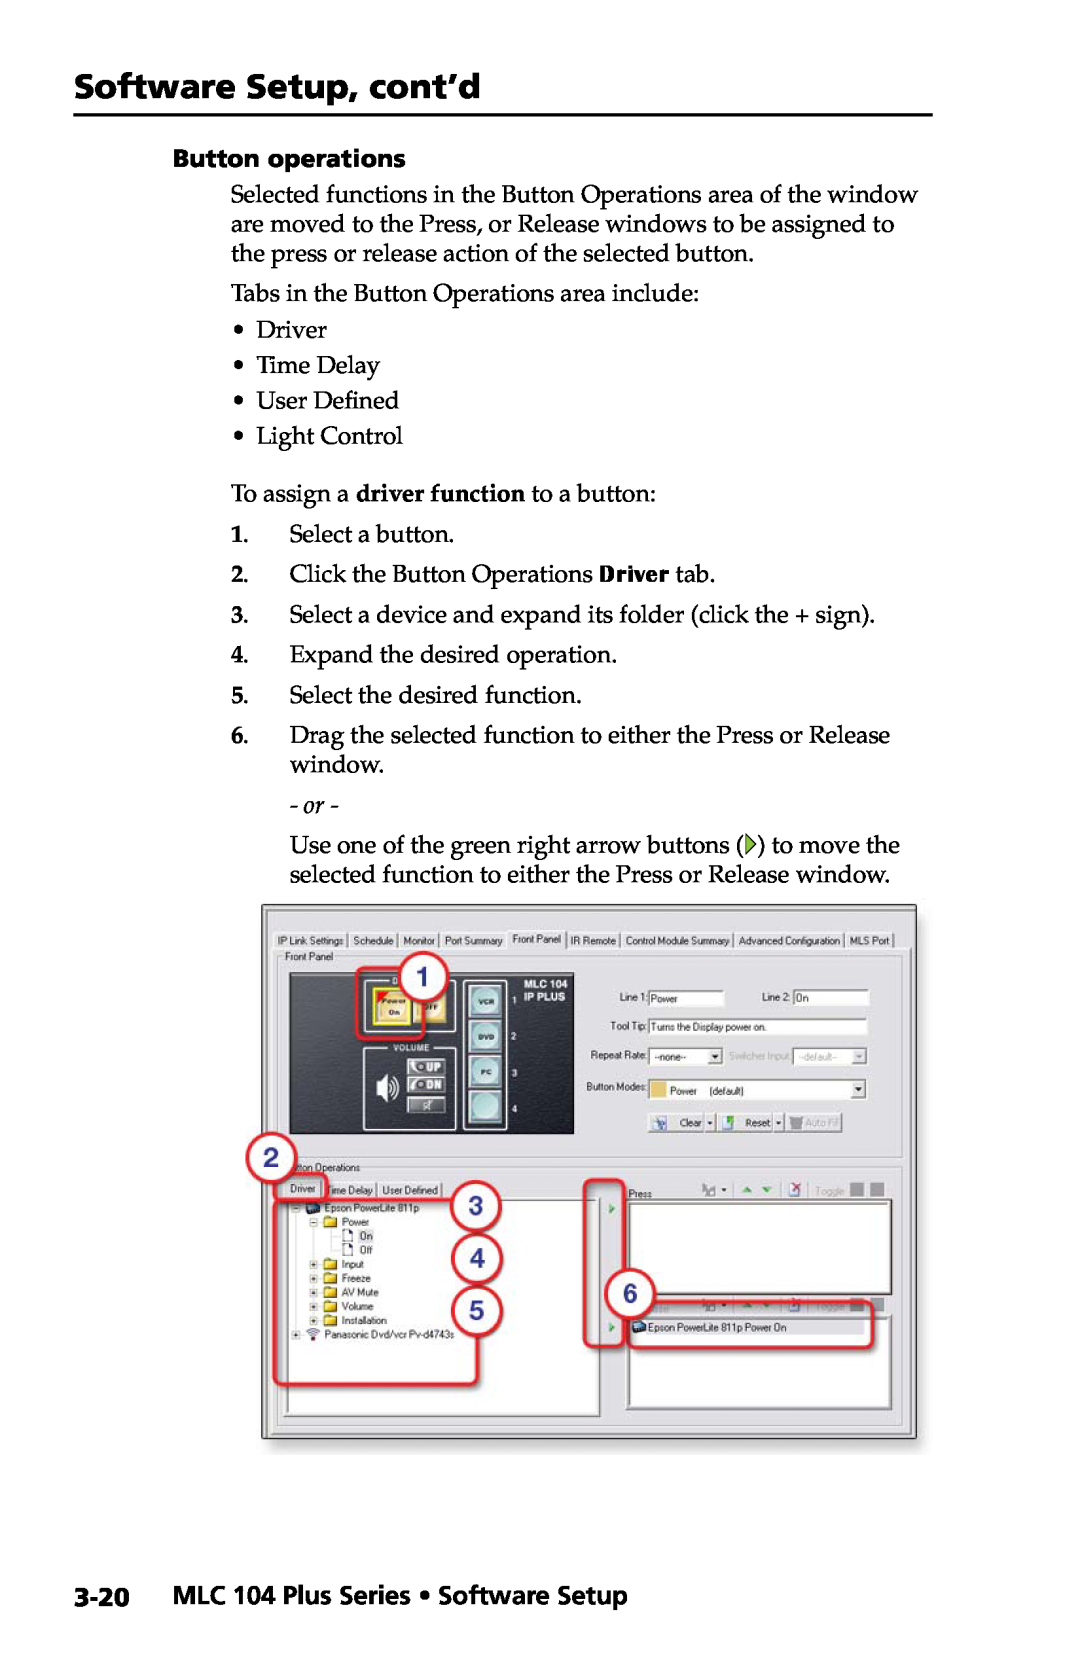 Extron electronic setup guide MLC 104 Plus Series Software Setup, Button operations, Software Setup, cont’d 